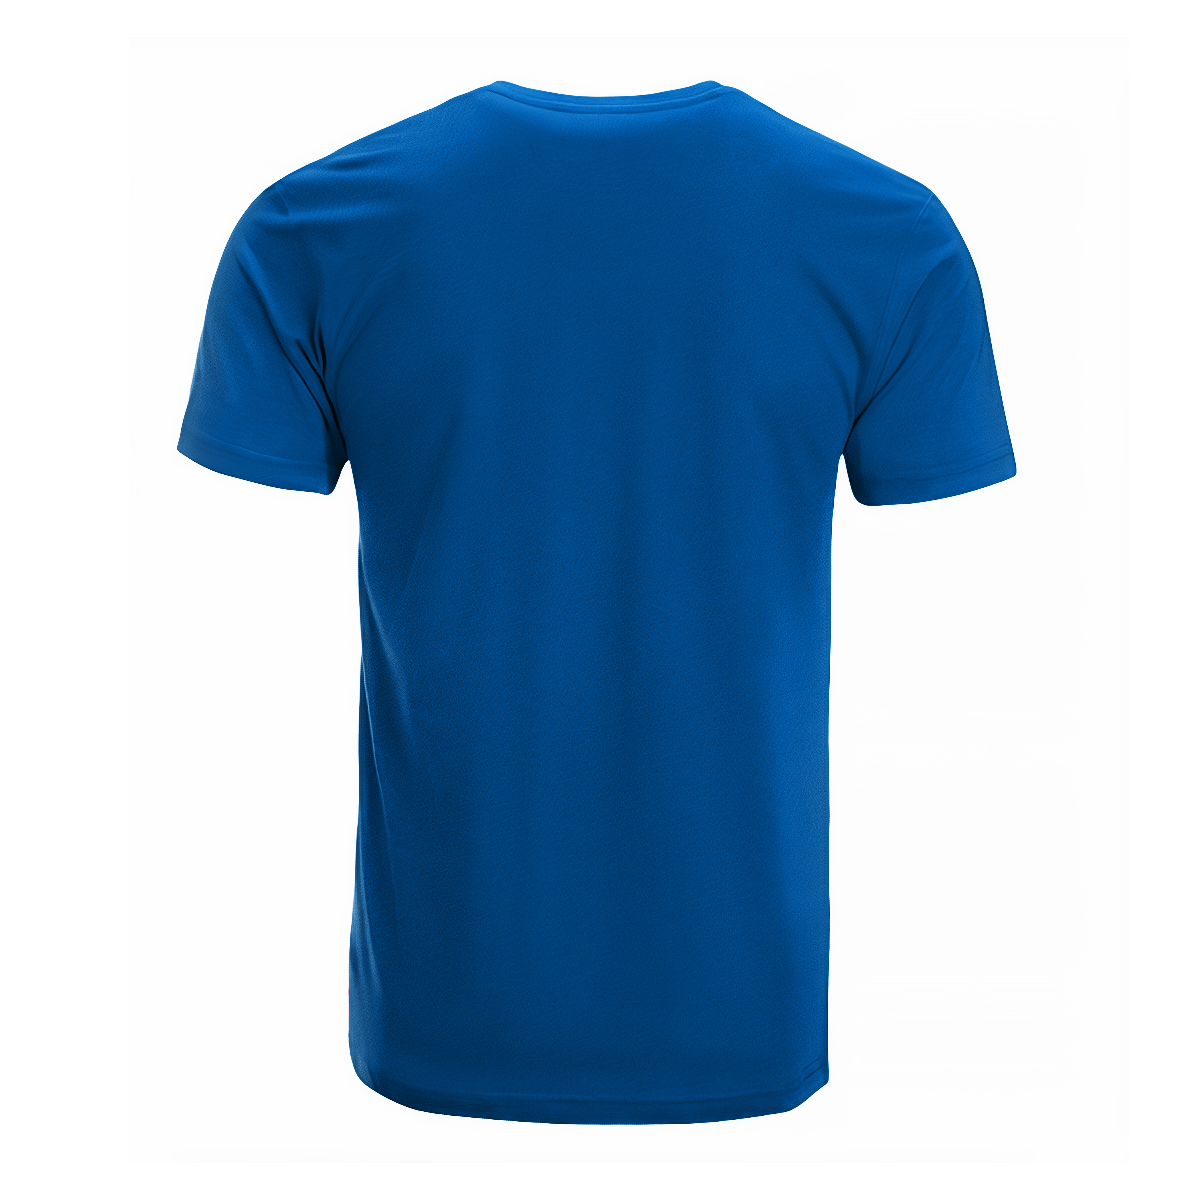 Thomas Tartan Crest T-shirt - I'm not yelling style